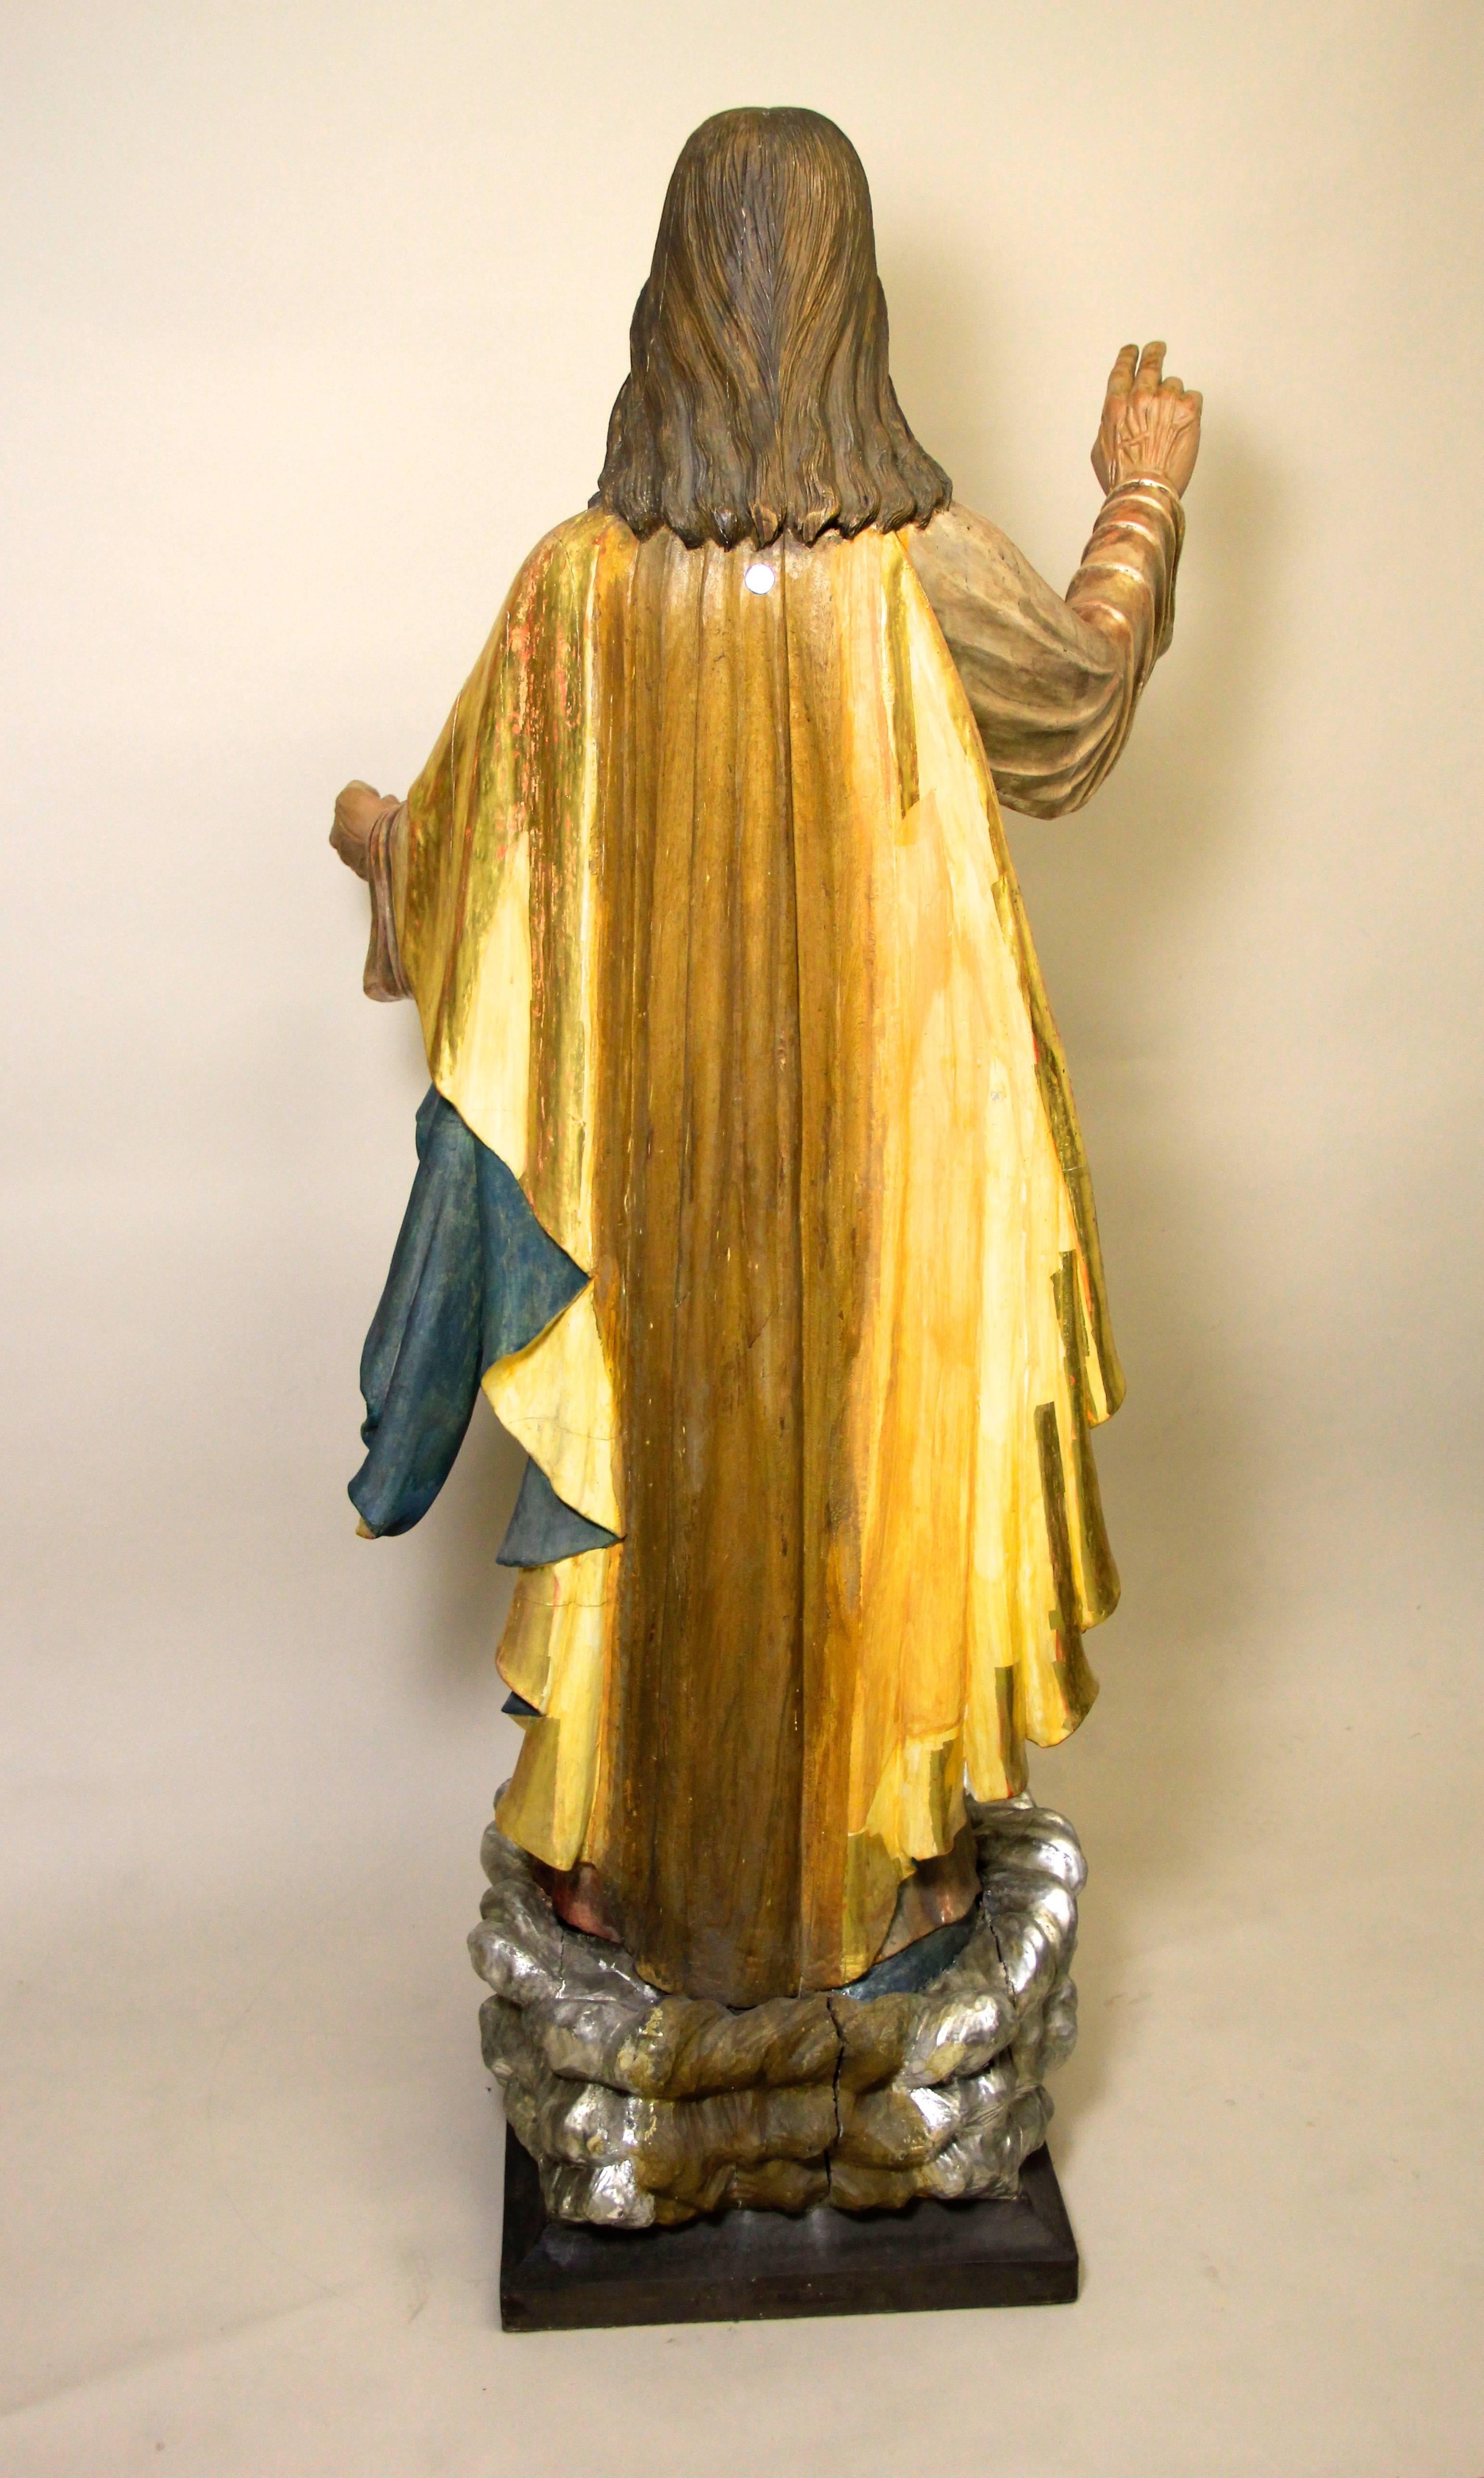 Gold Leaf Majestic Wooden Saint Statue of Jesus Christ, Austria First Half of 20th Century